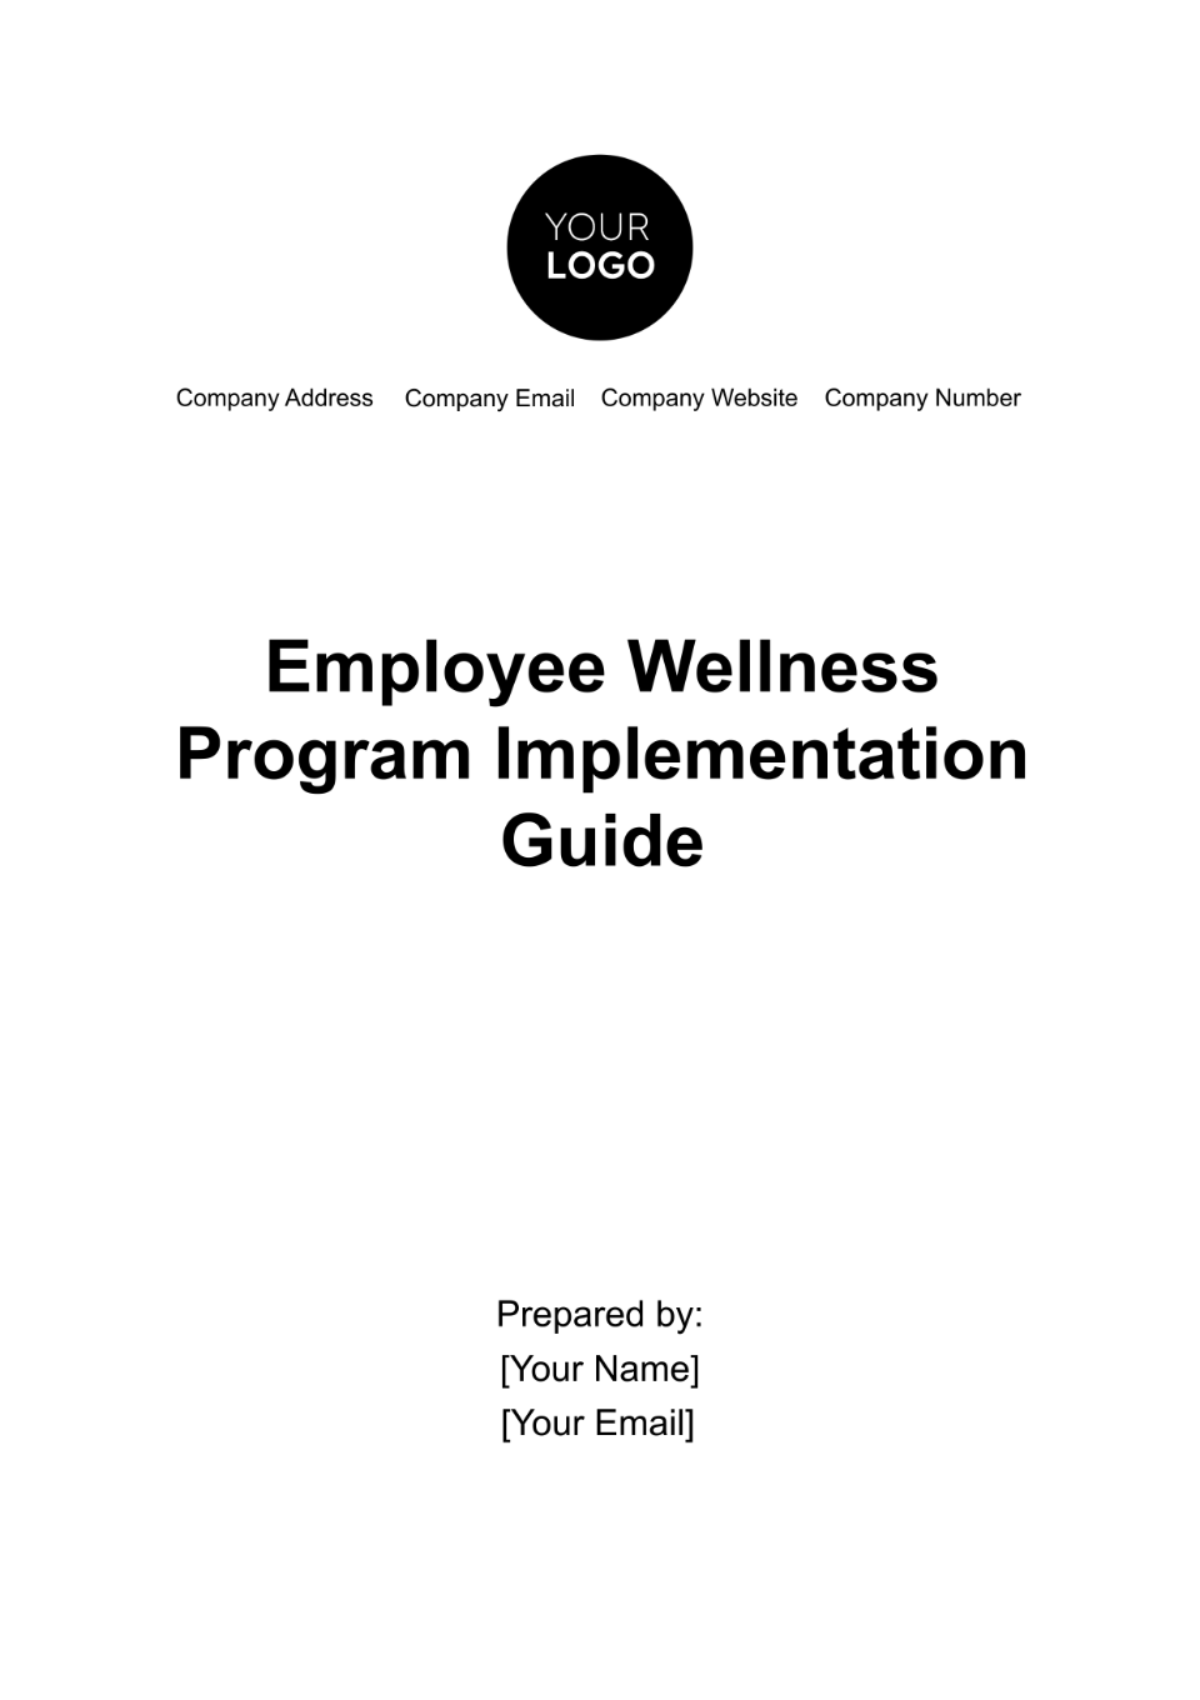 Employee Wellness Program Implementation Guide Template